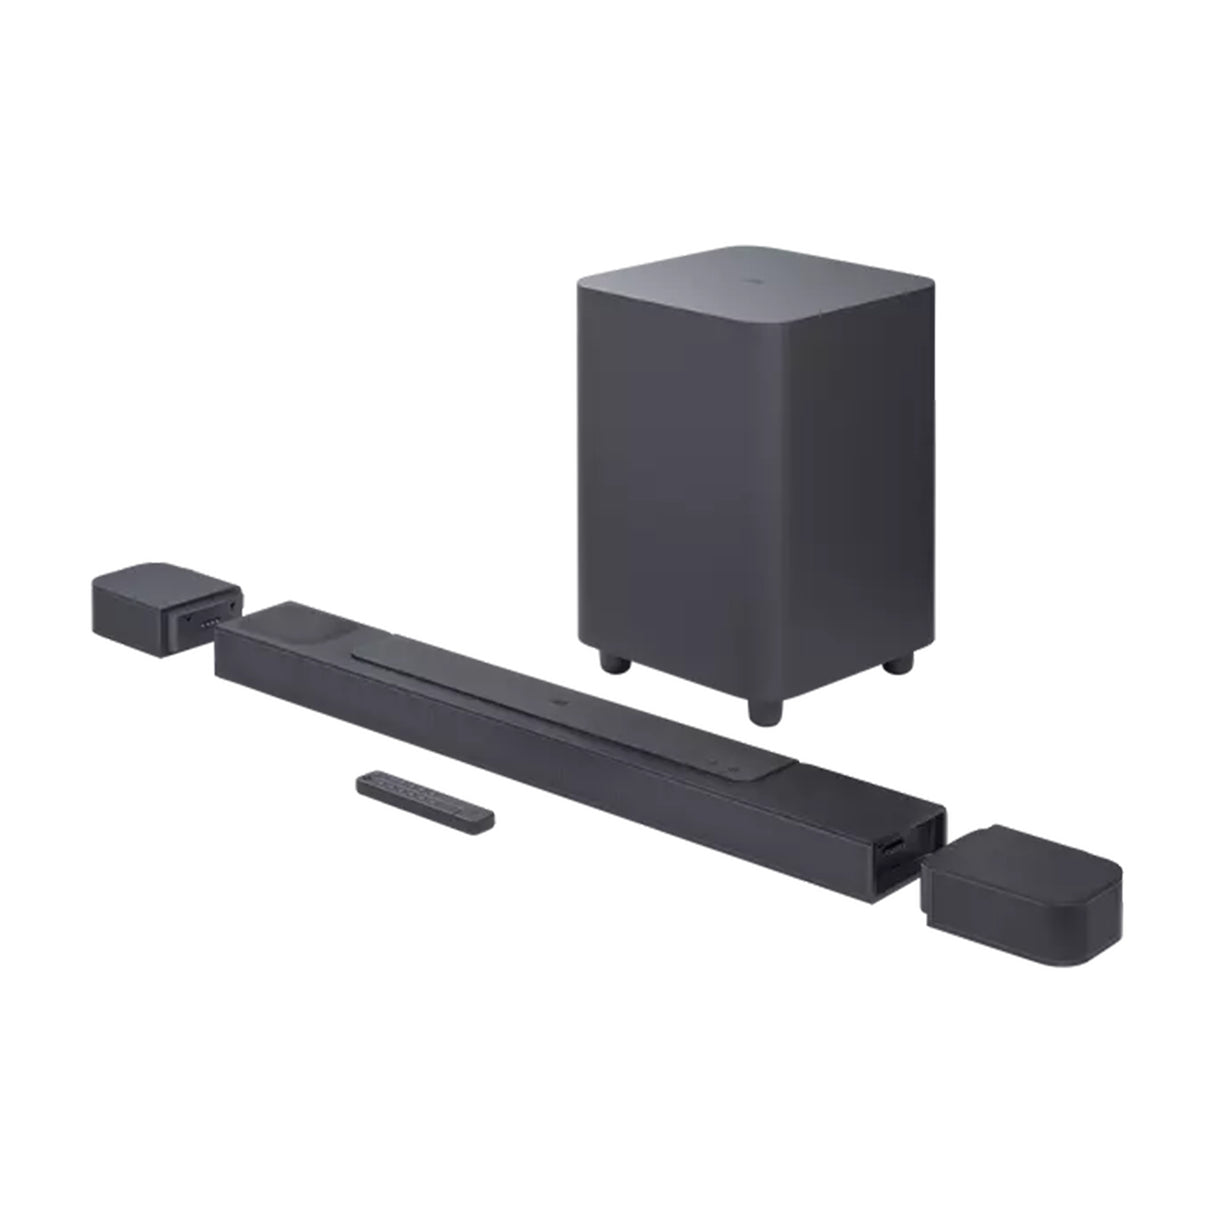 Jbl Bar 800 - True Dolby Atmos Surround Soundbar with Detachable Speakers